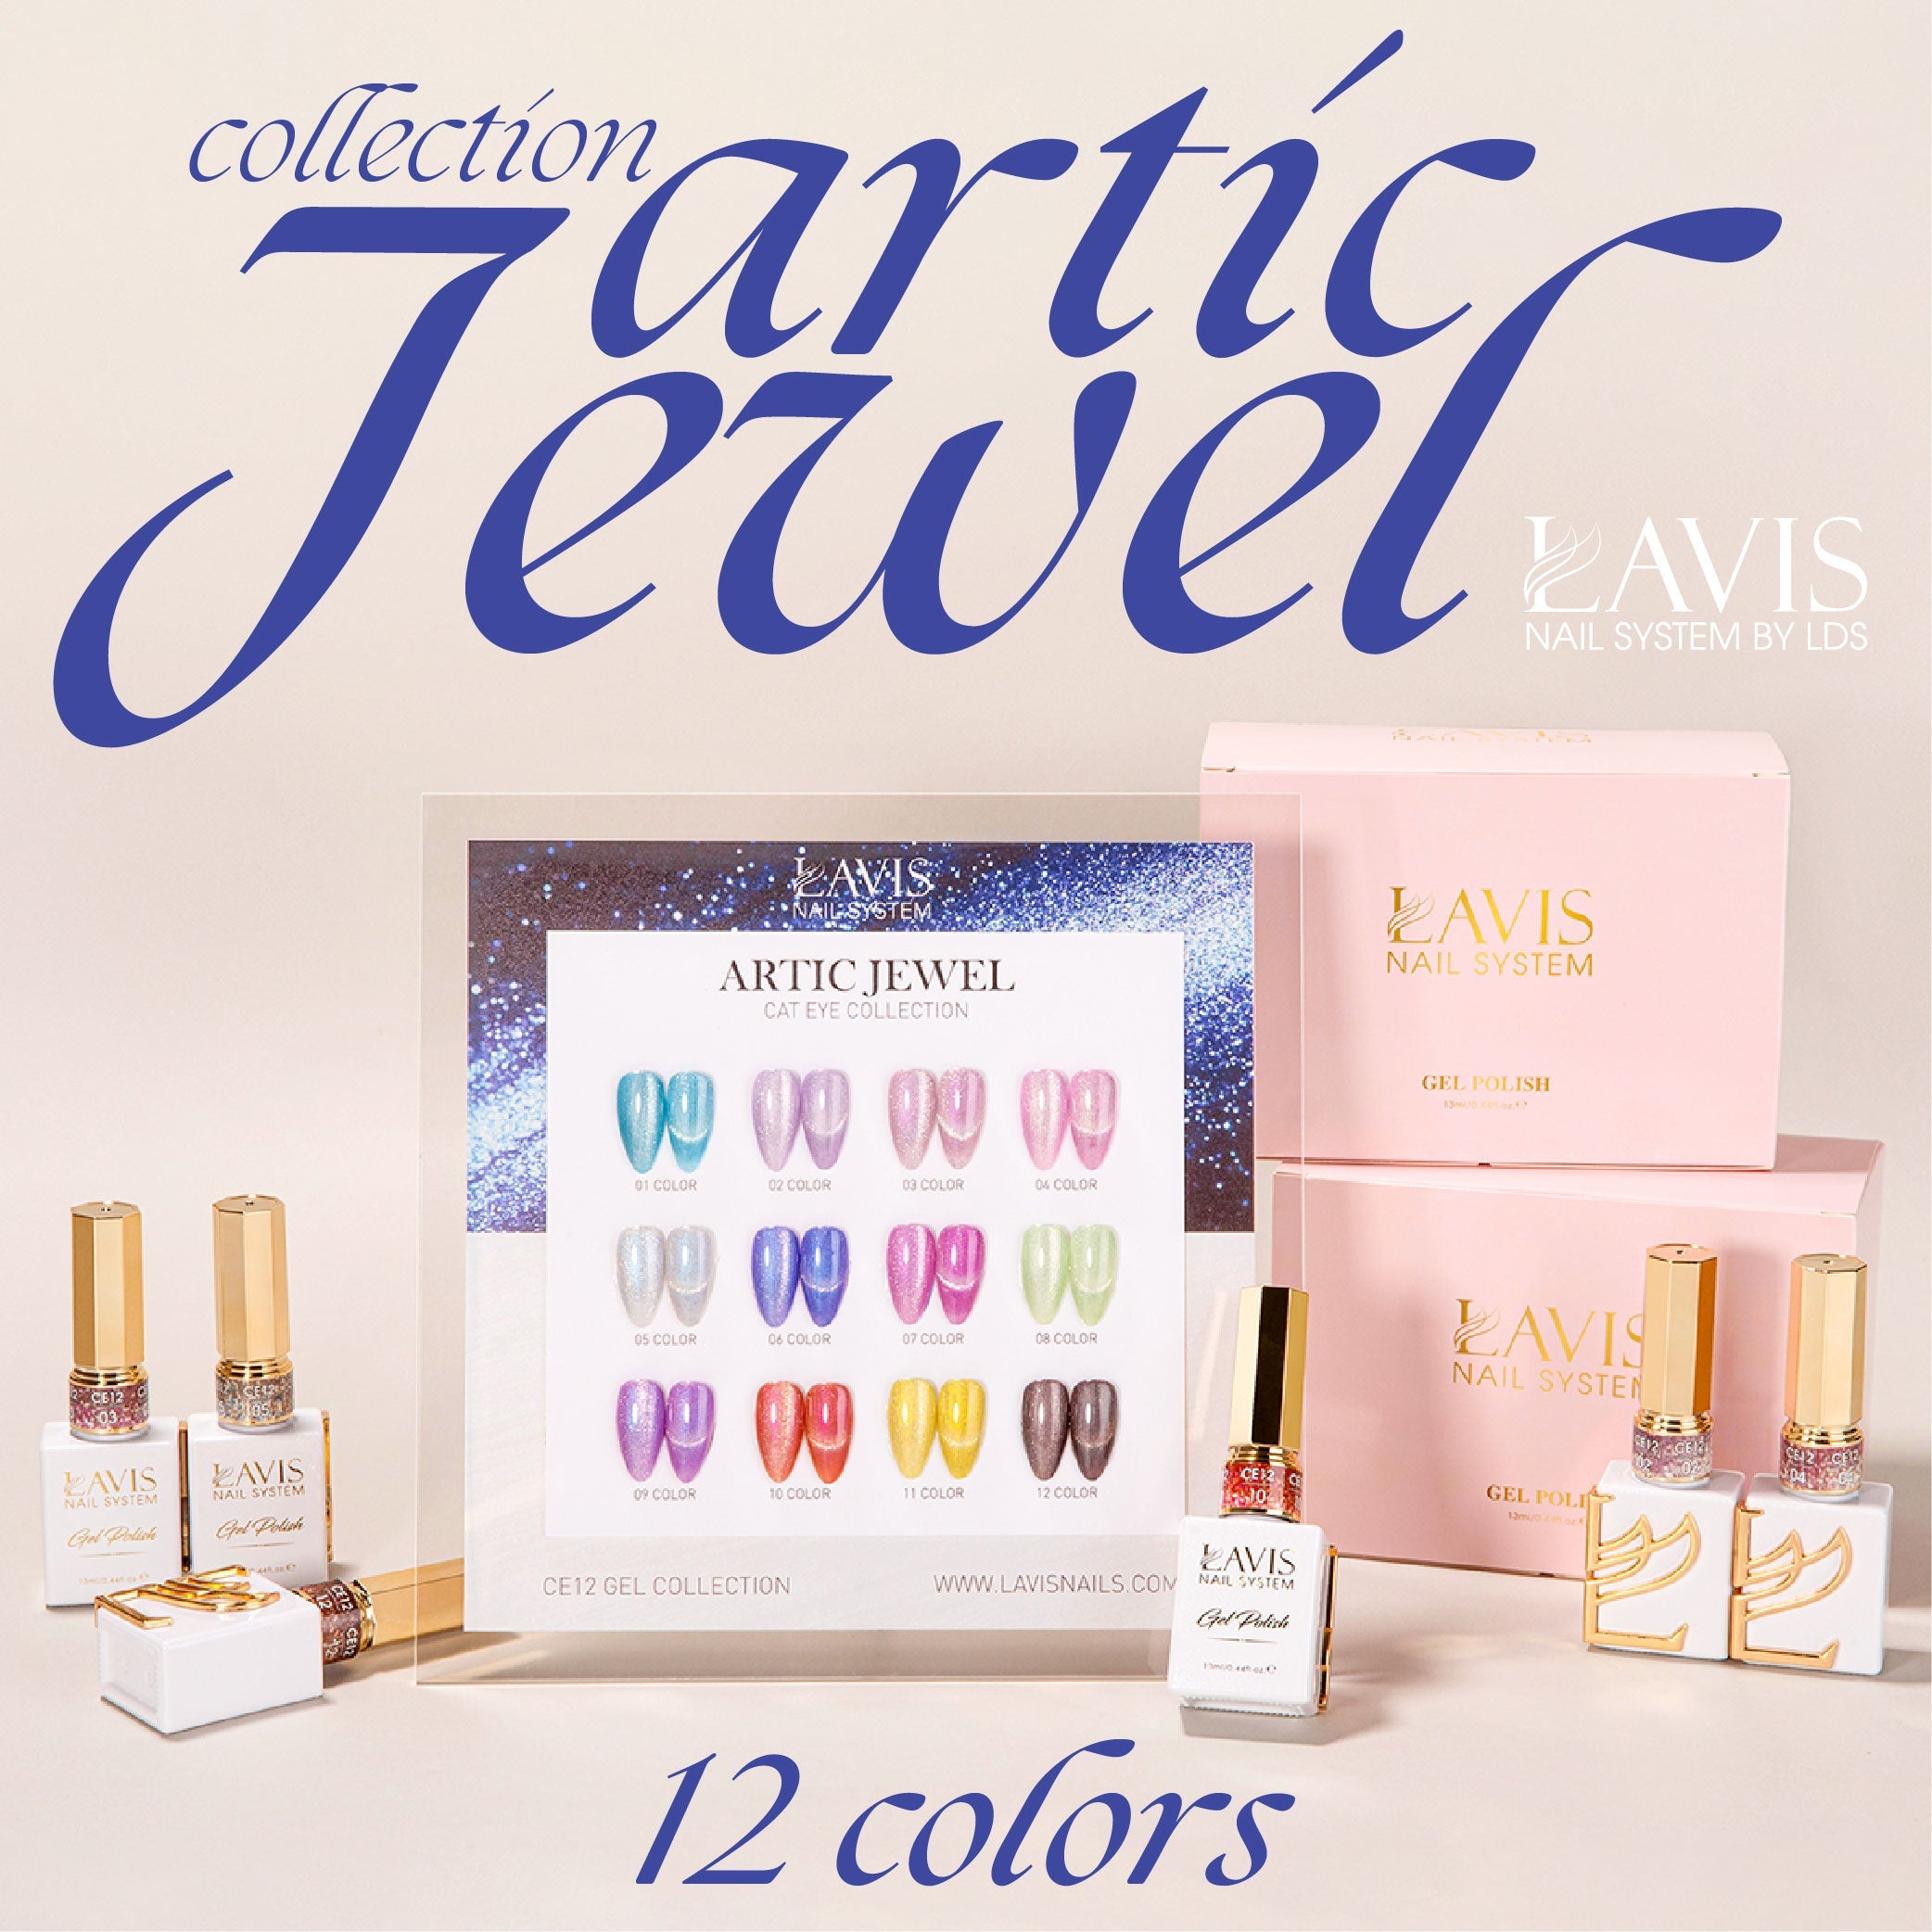 Lavis CE12 - Set 12 Colors - Gel Polish 0.5 oz - Artic Jewel Collection V2